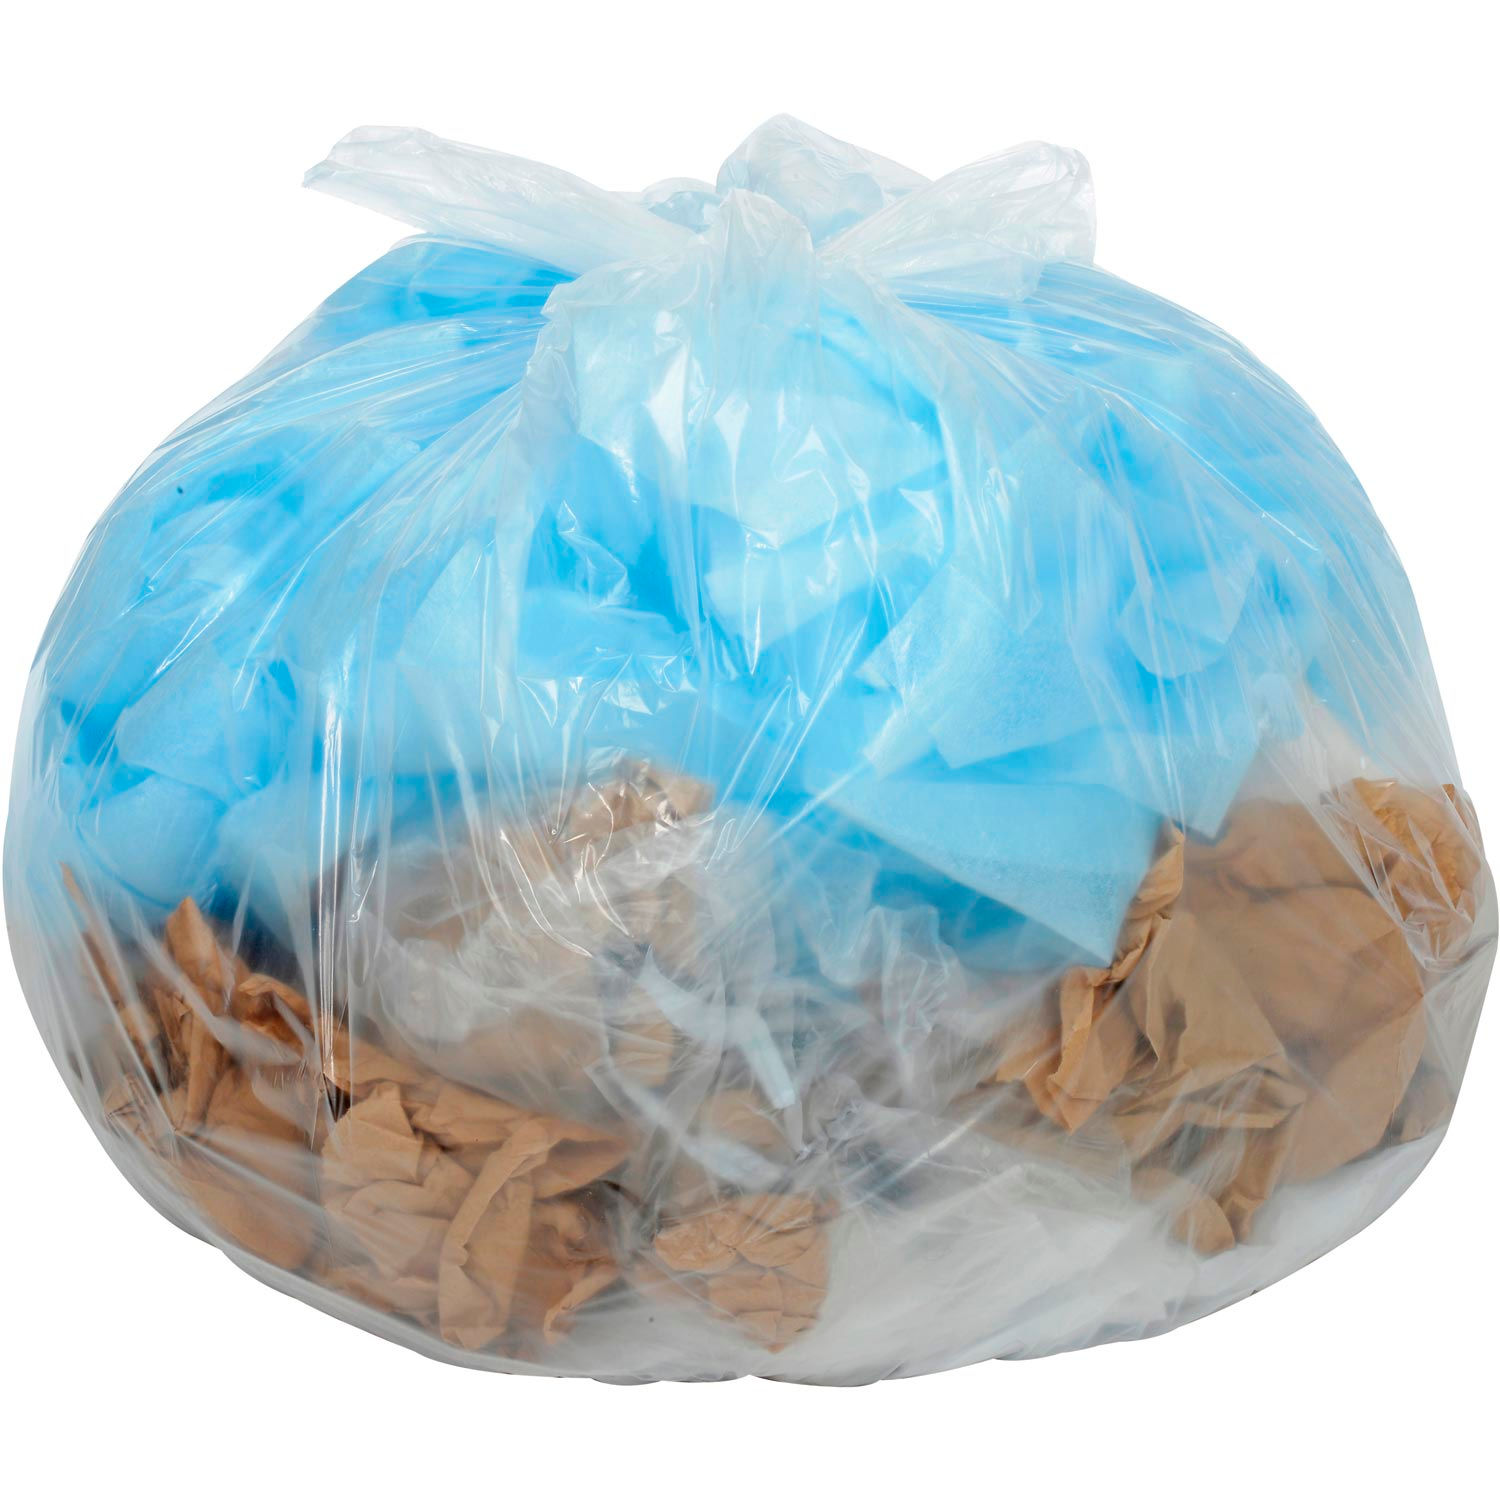 heavy duty clear plastic trash bags